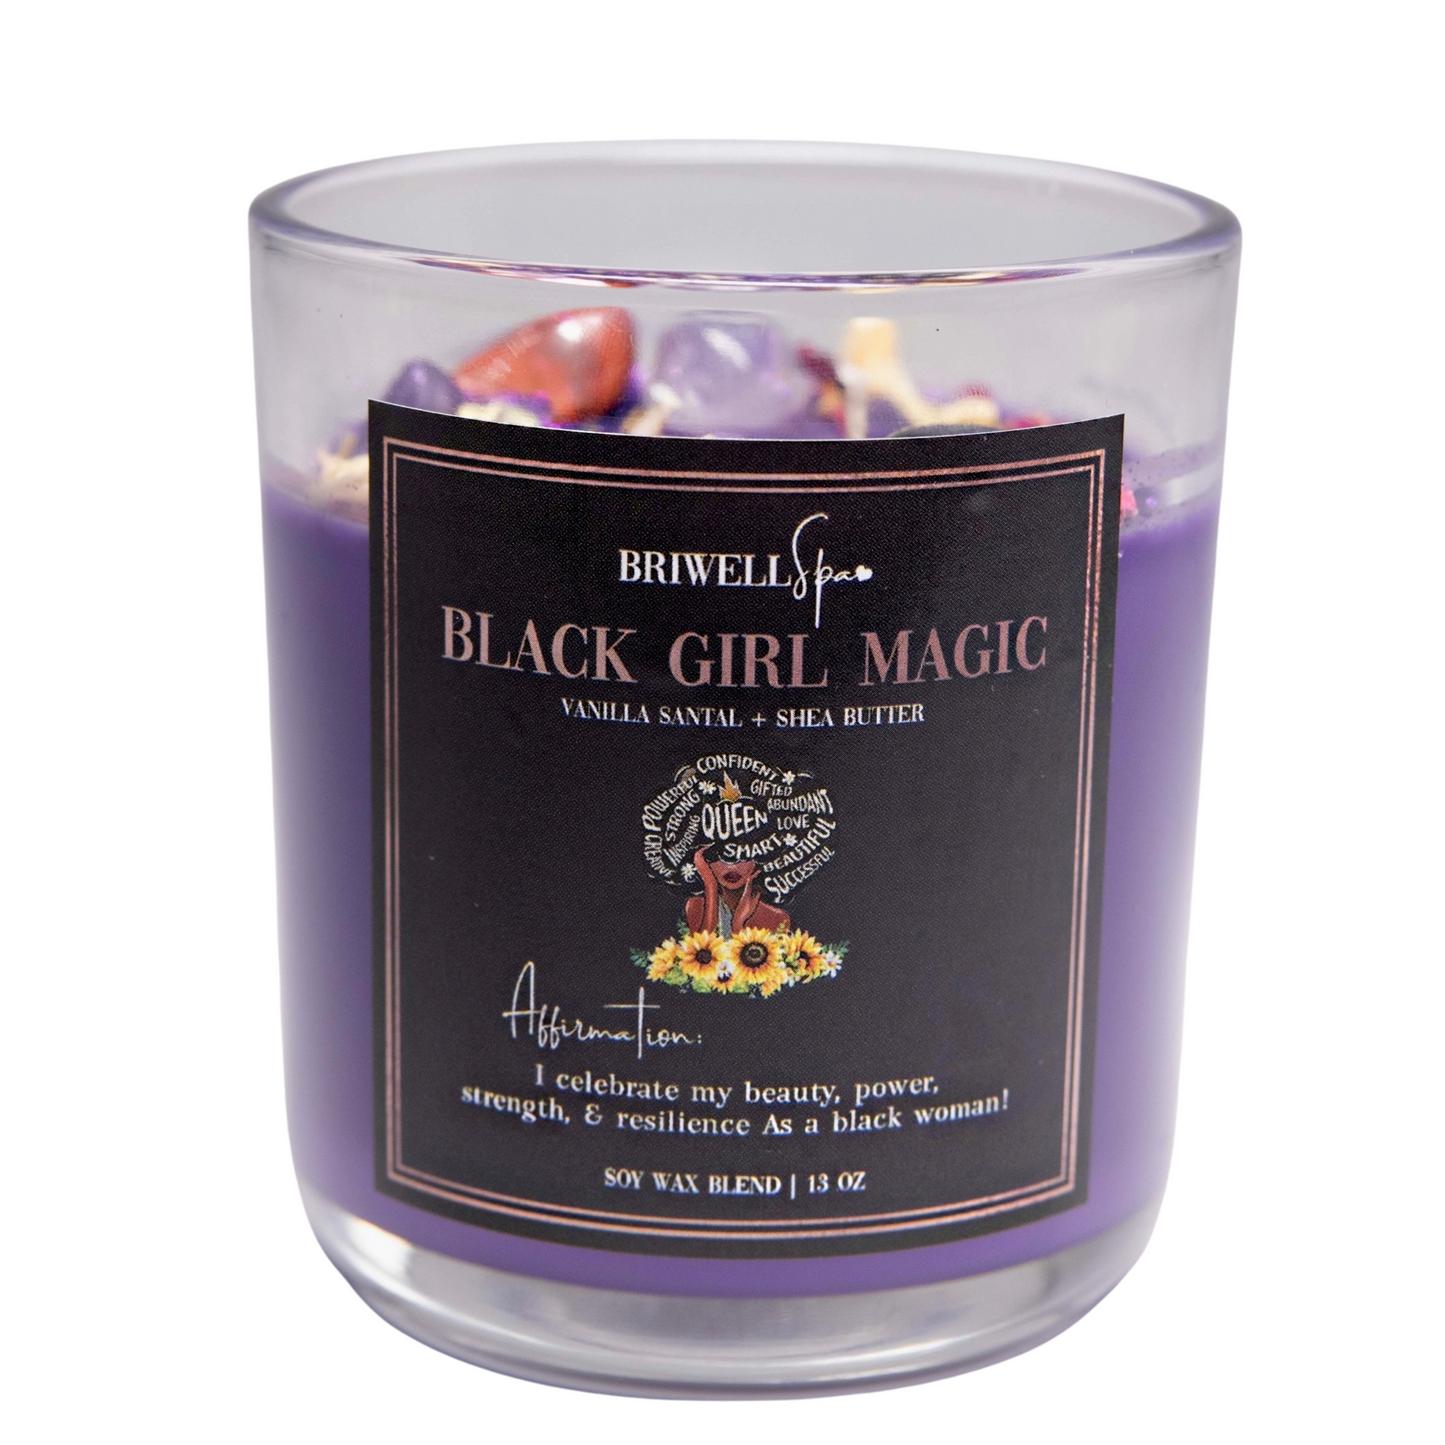 "Black Girl Magic" Candle